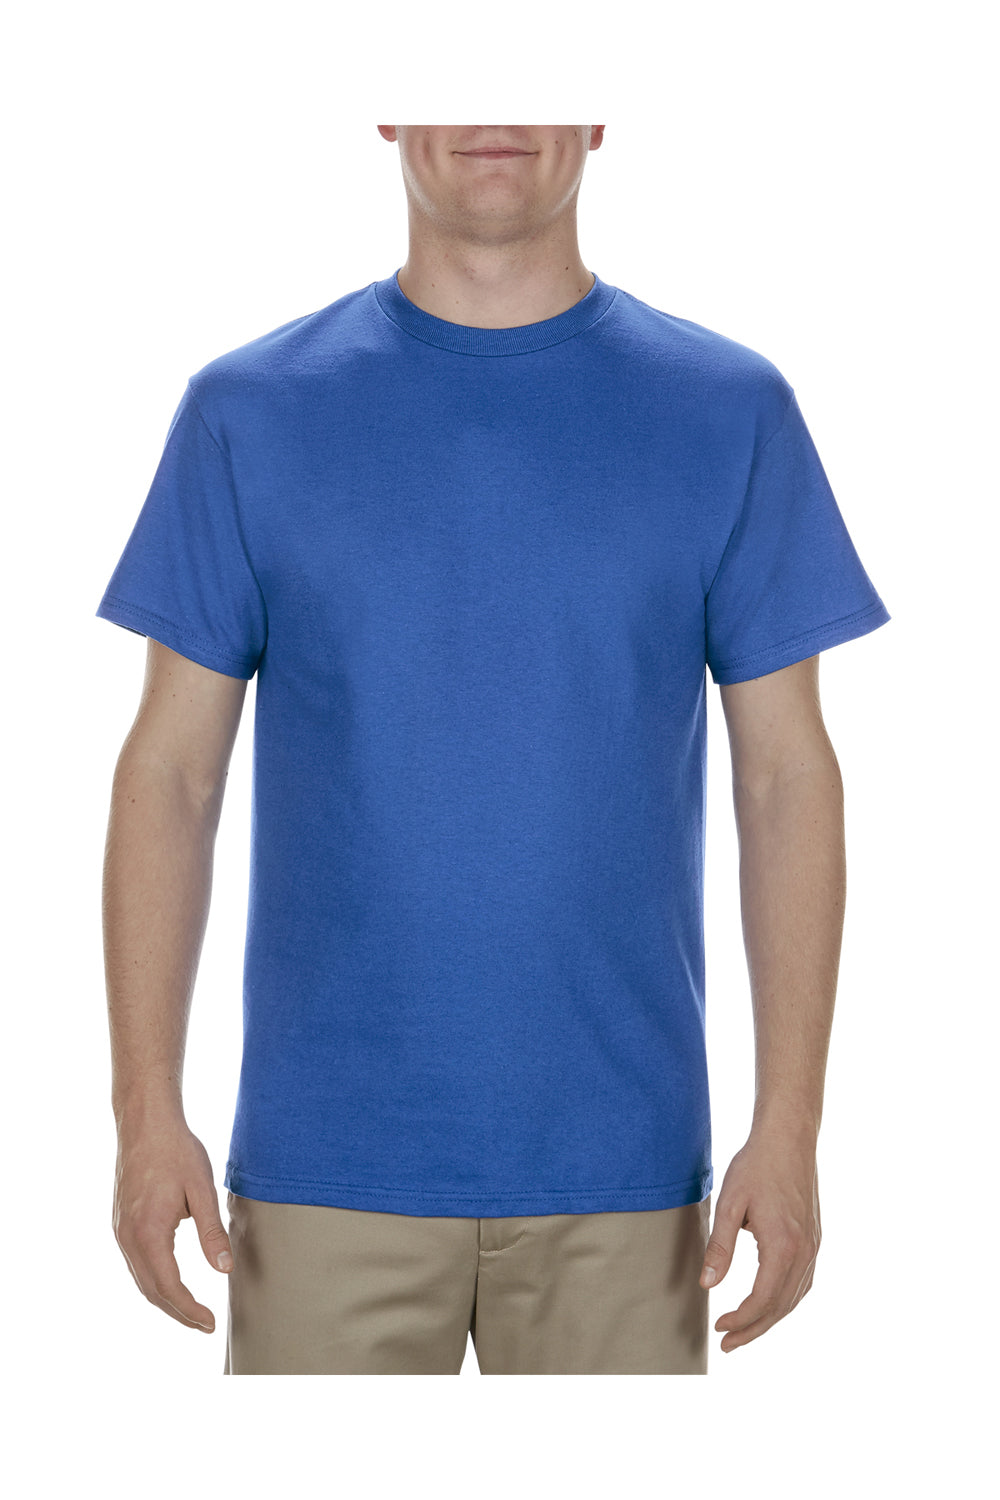 Alstyle AL1901 Mens Short Sleeve Crewneck T-Shirt Royal Blue Front